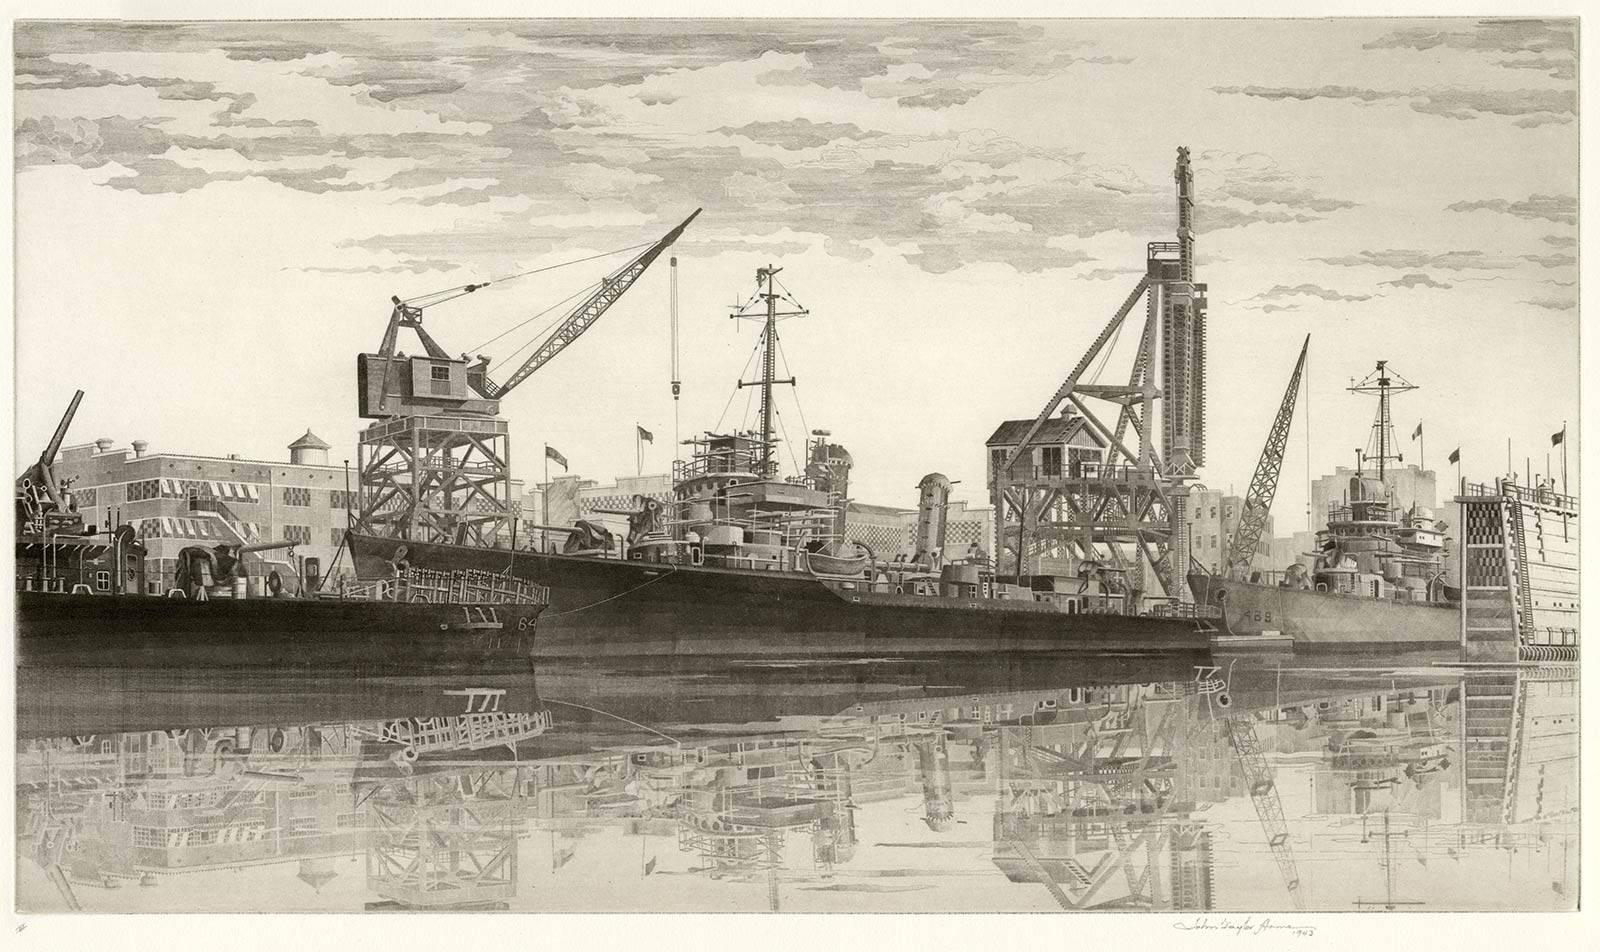 John Taylor Arms Landscape Print - Destroyers in Wet Basin, USS Radford at Federal Shipbuilding and Drydock, NJ